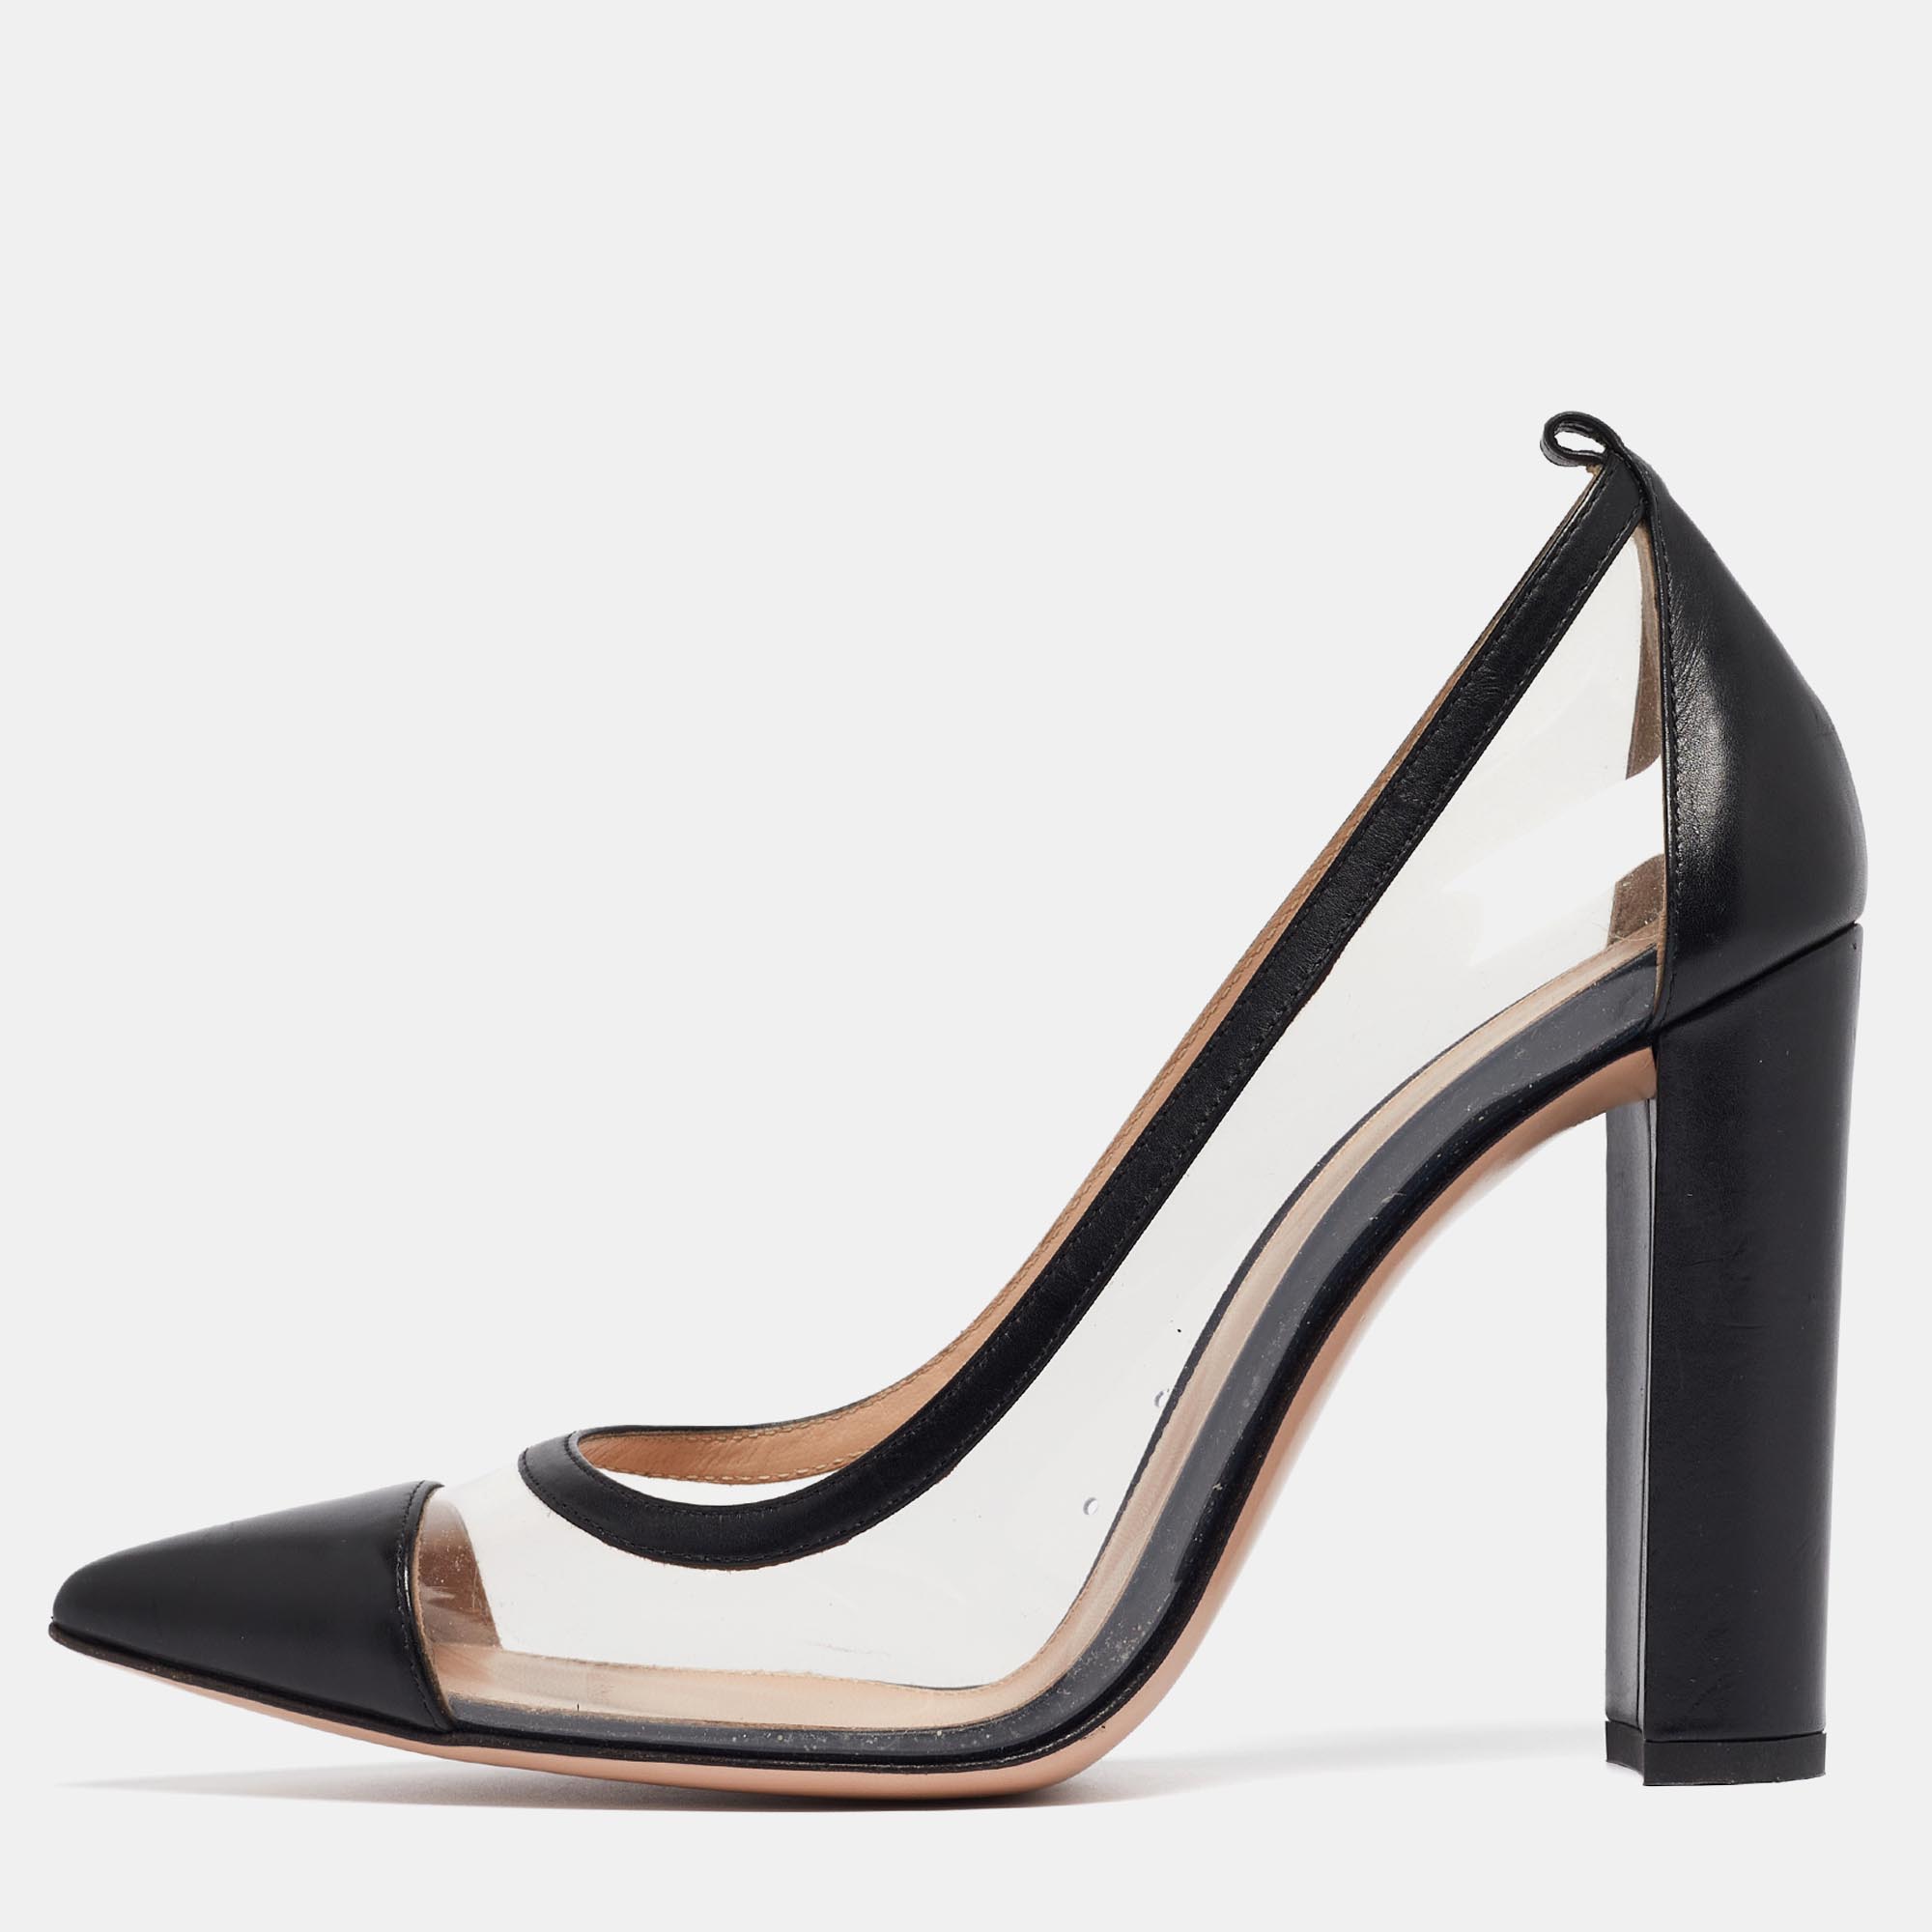 Gianvito rossi black leather and pvc plexi block heel pumps size 39